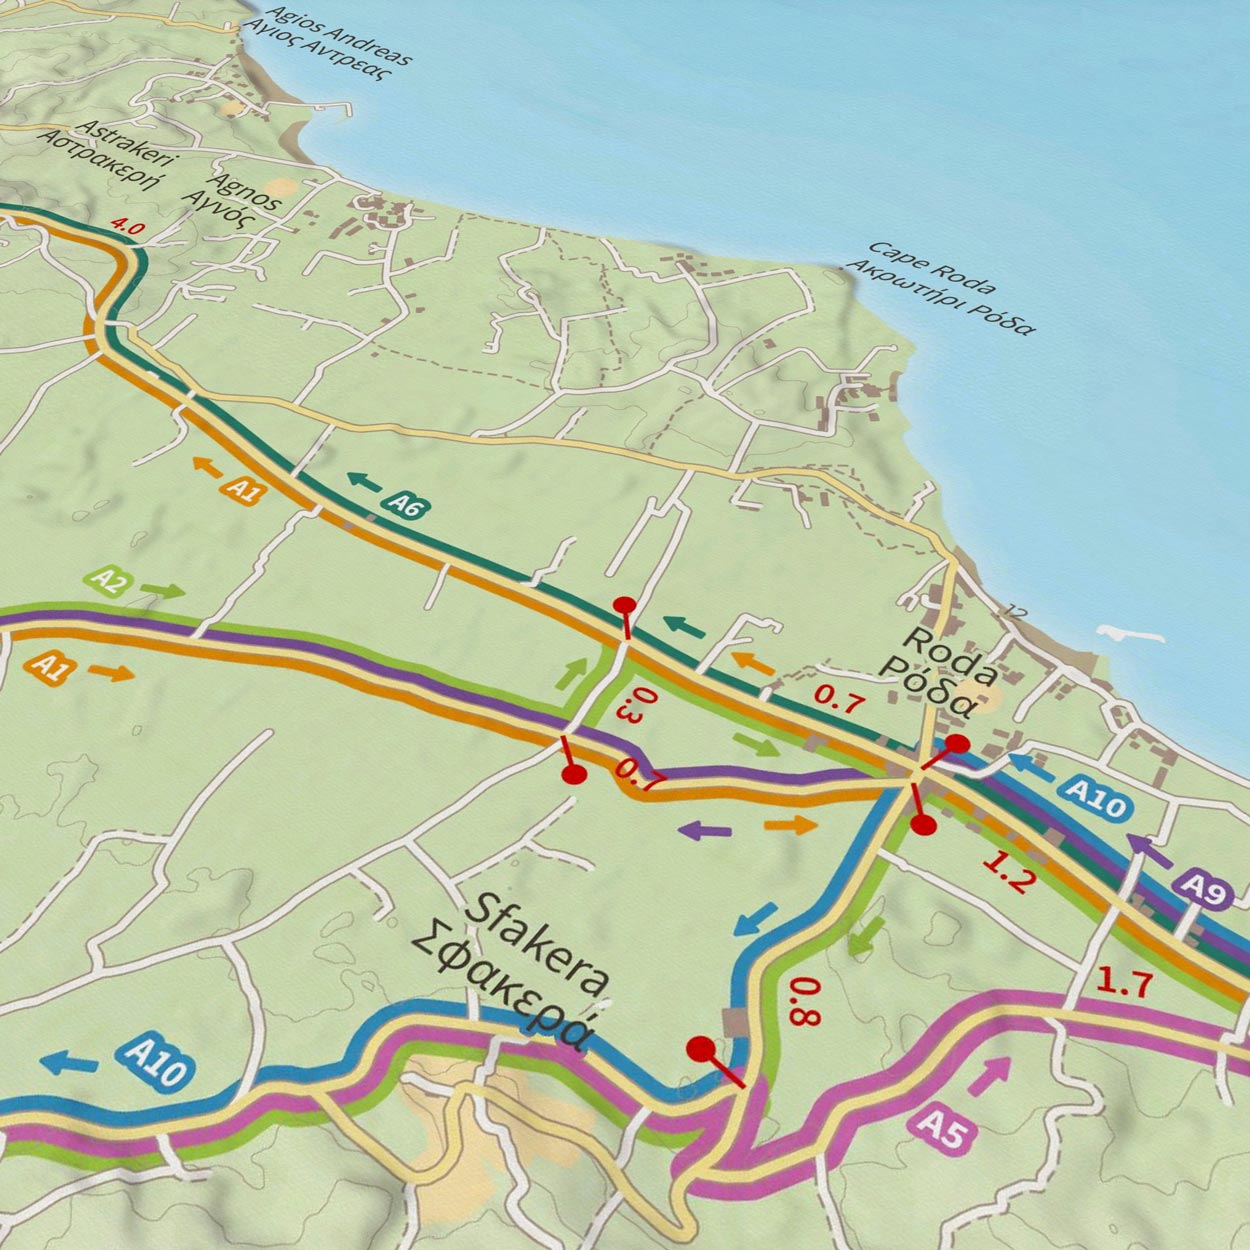 S-Bikes Cycle Corfu - Asphalt Routes